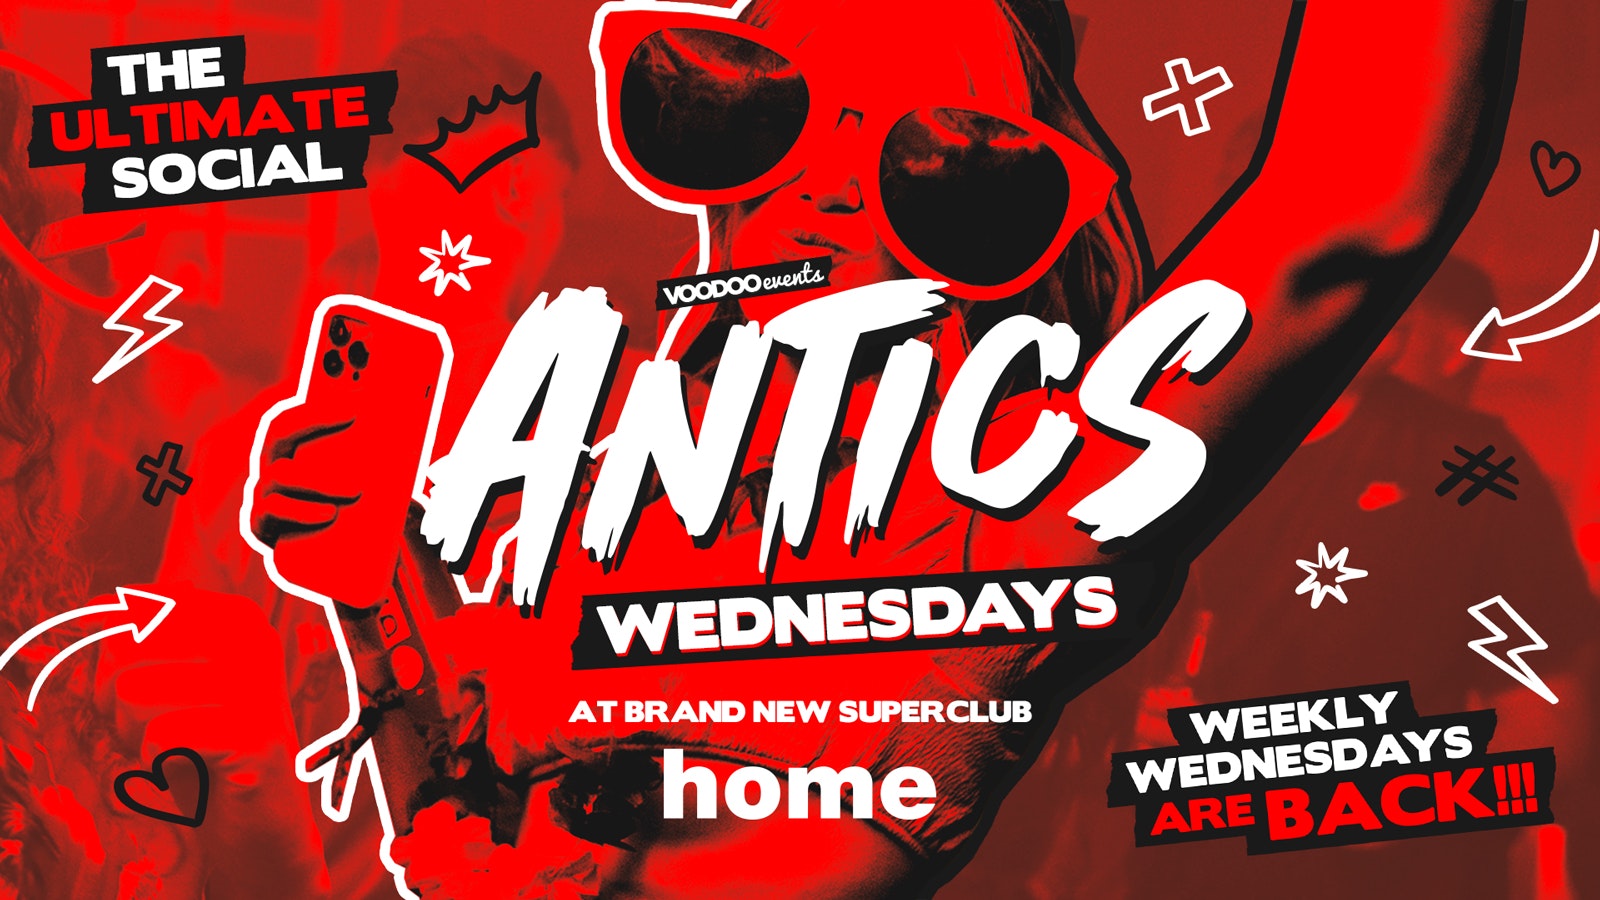 Antics @ THE BRAND NEW SUPER CLUB HOME – Wednesday 17th April